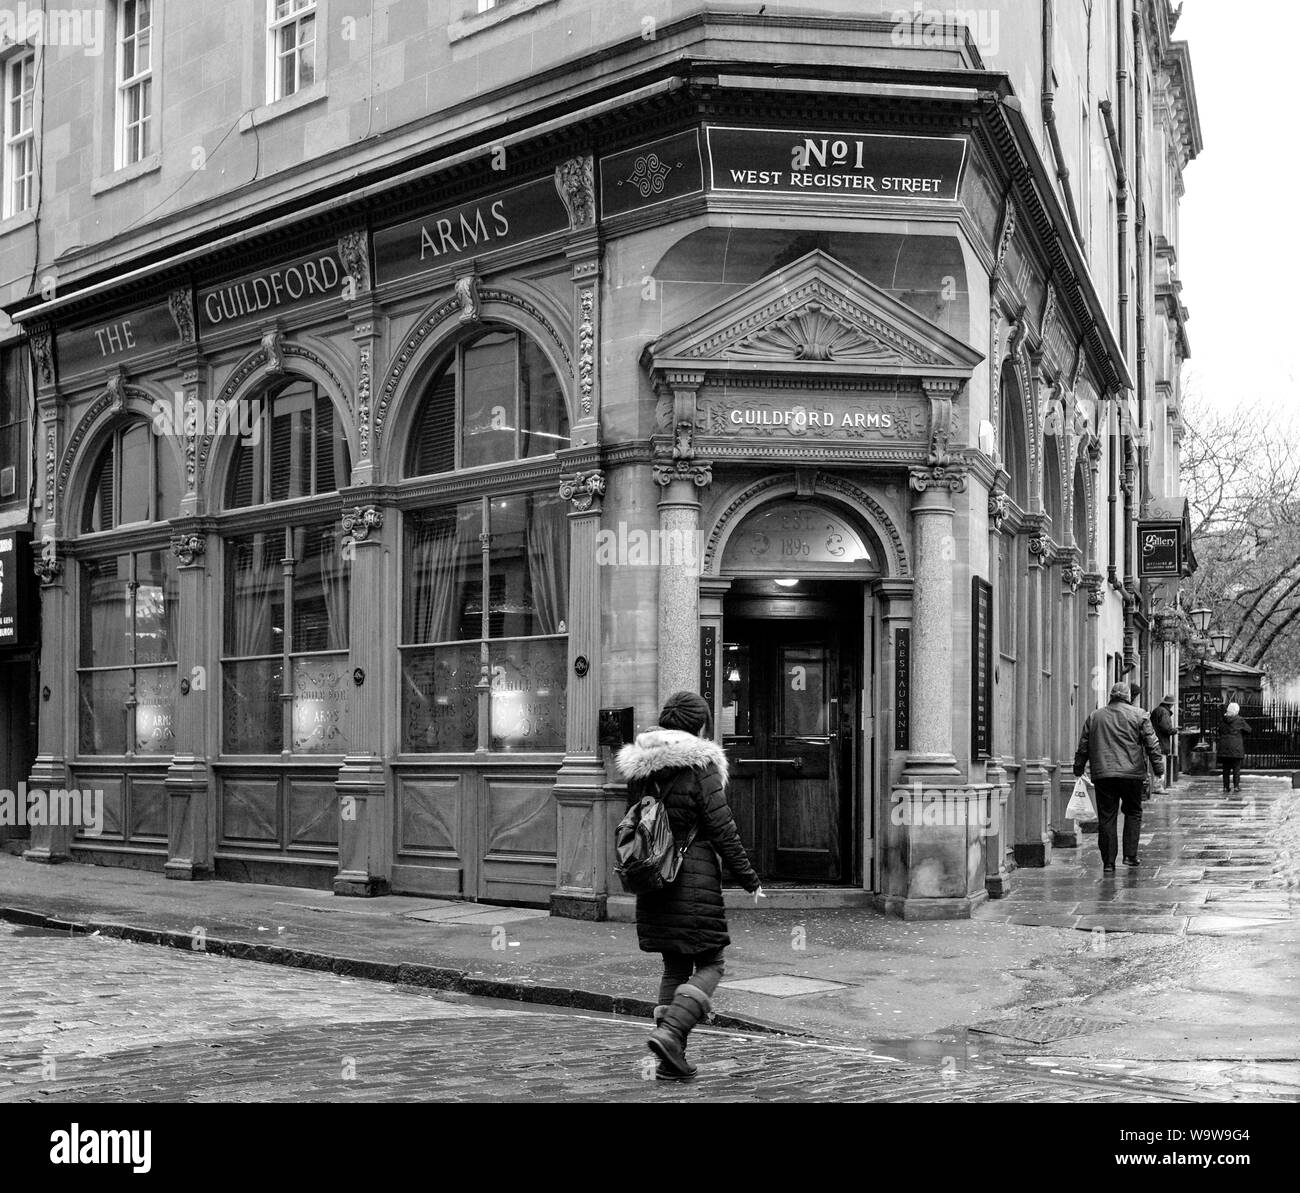 The Guildford Arms, 1 West Register St, Edinburgh EH2 2AA - Classic Edinburgh New Town Victorian Bar & Restaurant. Stock Photo